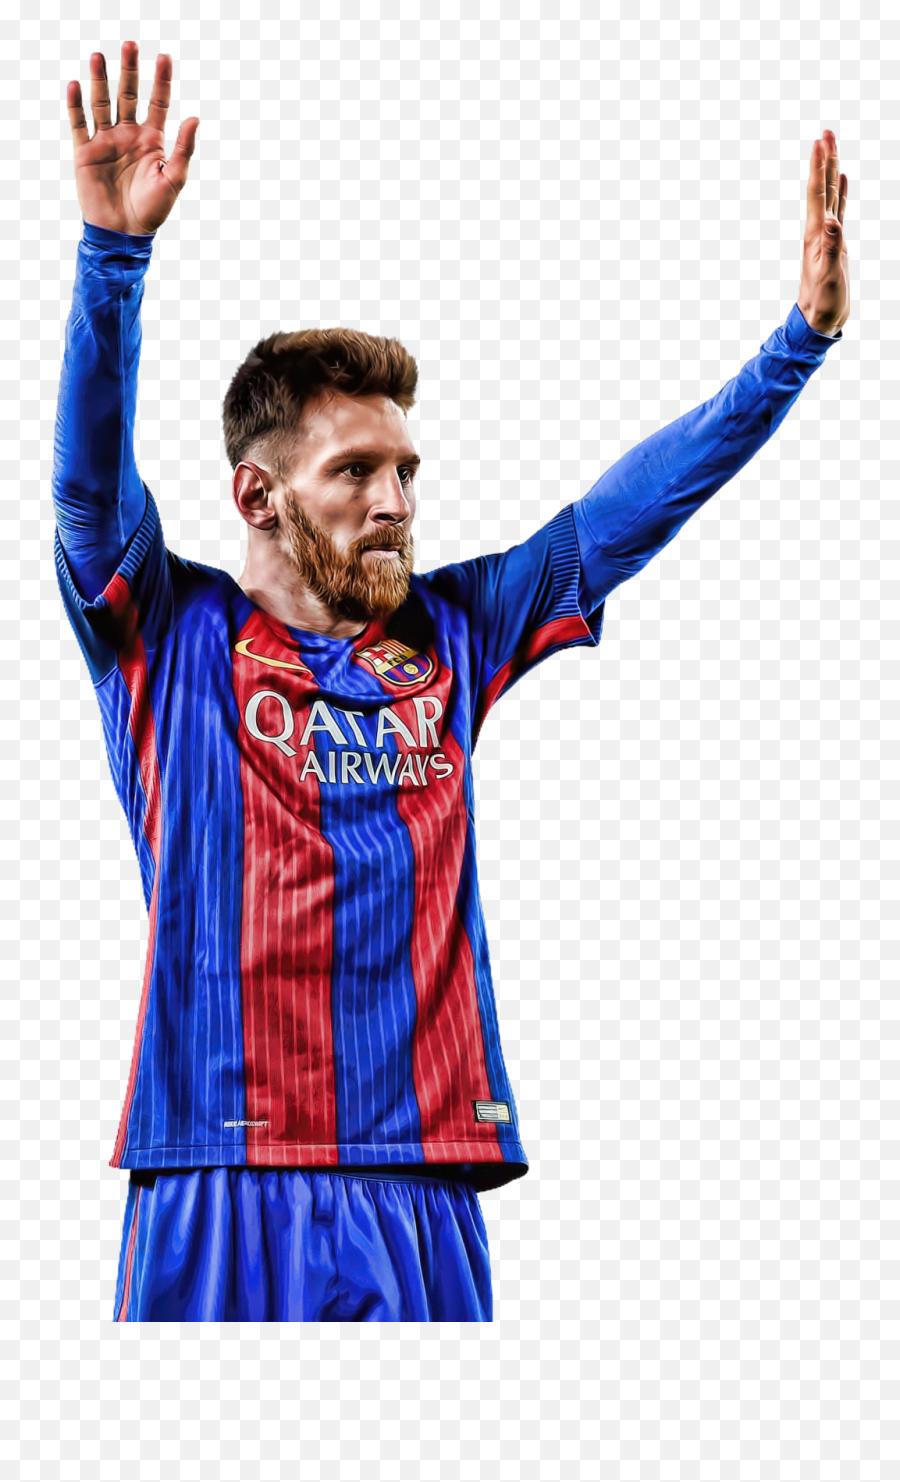 Download Messi 2017 No Background Png Image With No Emoji,Messi Transparent